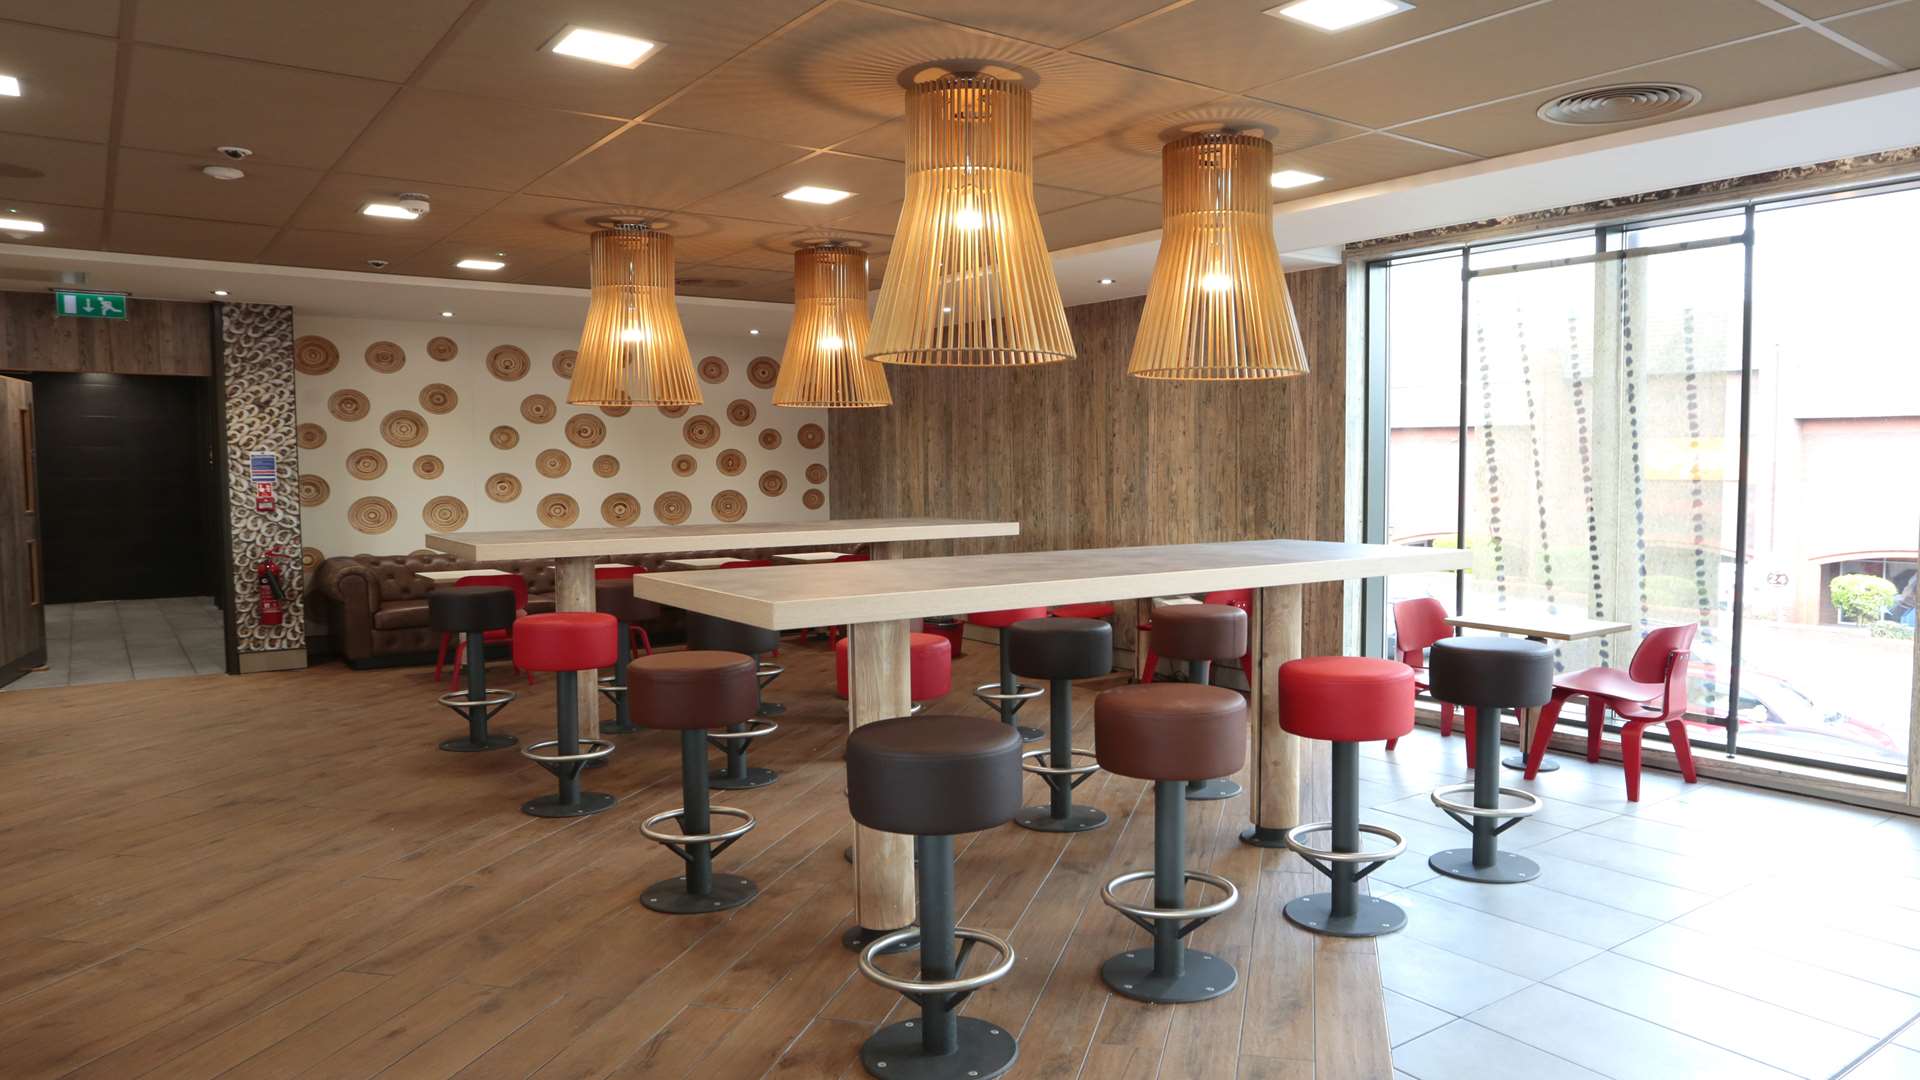 The new McDonald's restaurant in Maidstone